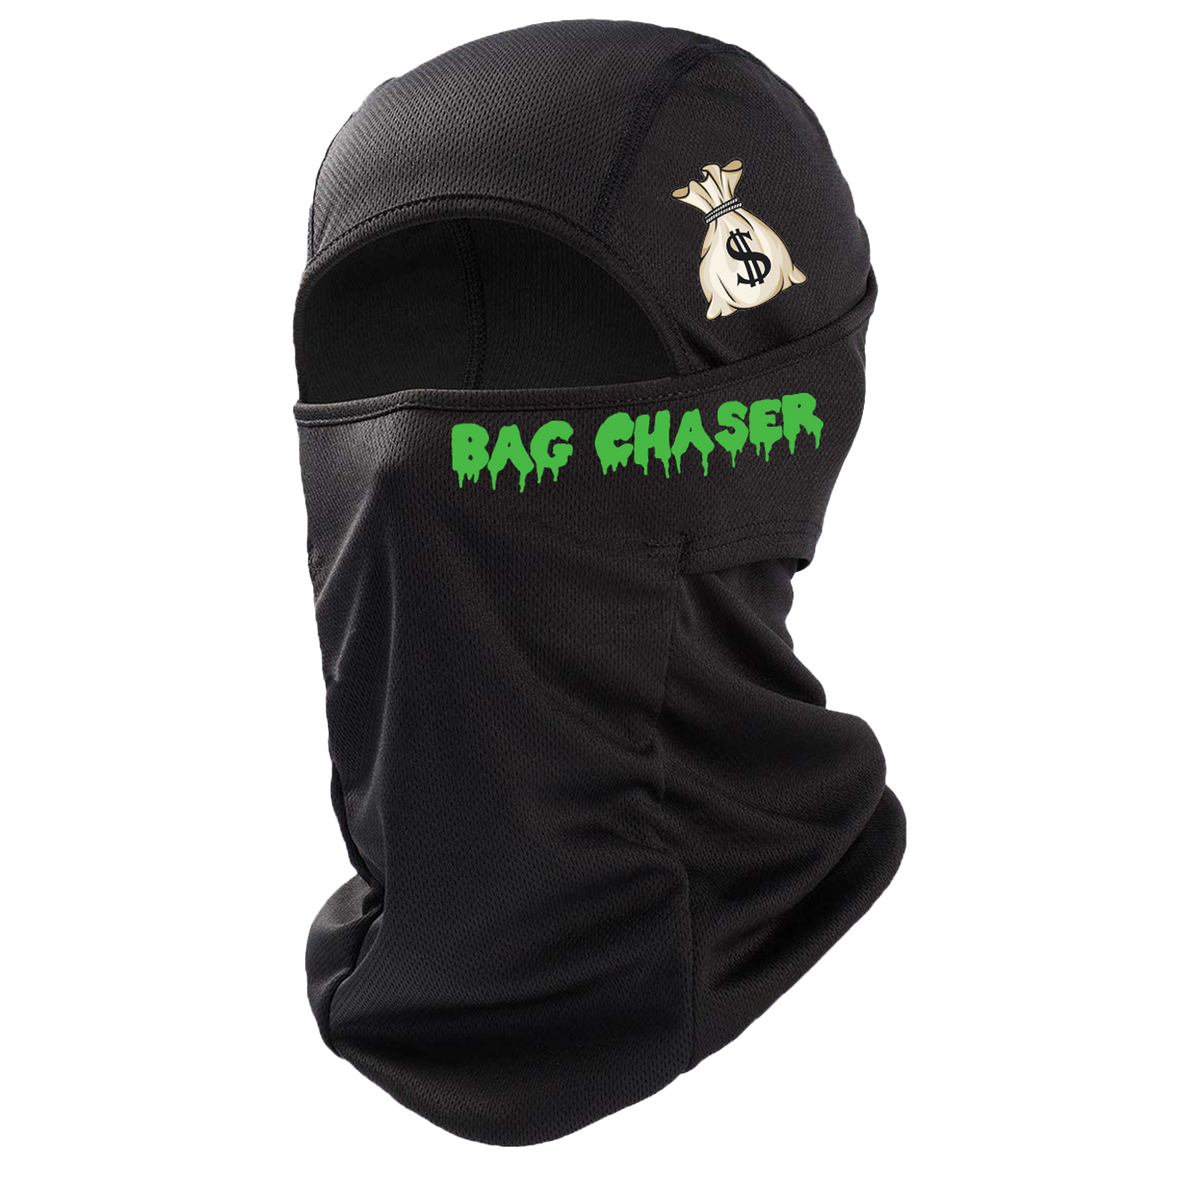 Bag Chaser Money Bag Lightweight Balaclava Ski mask